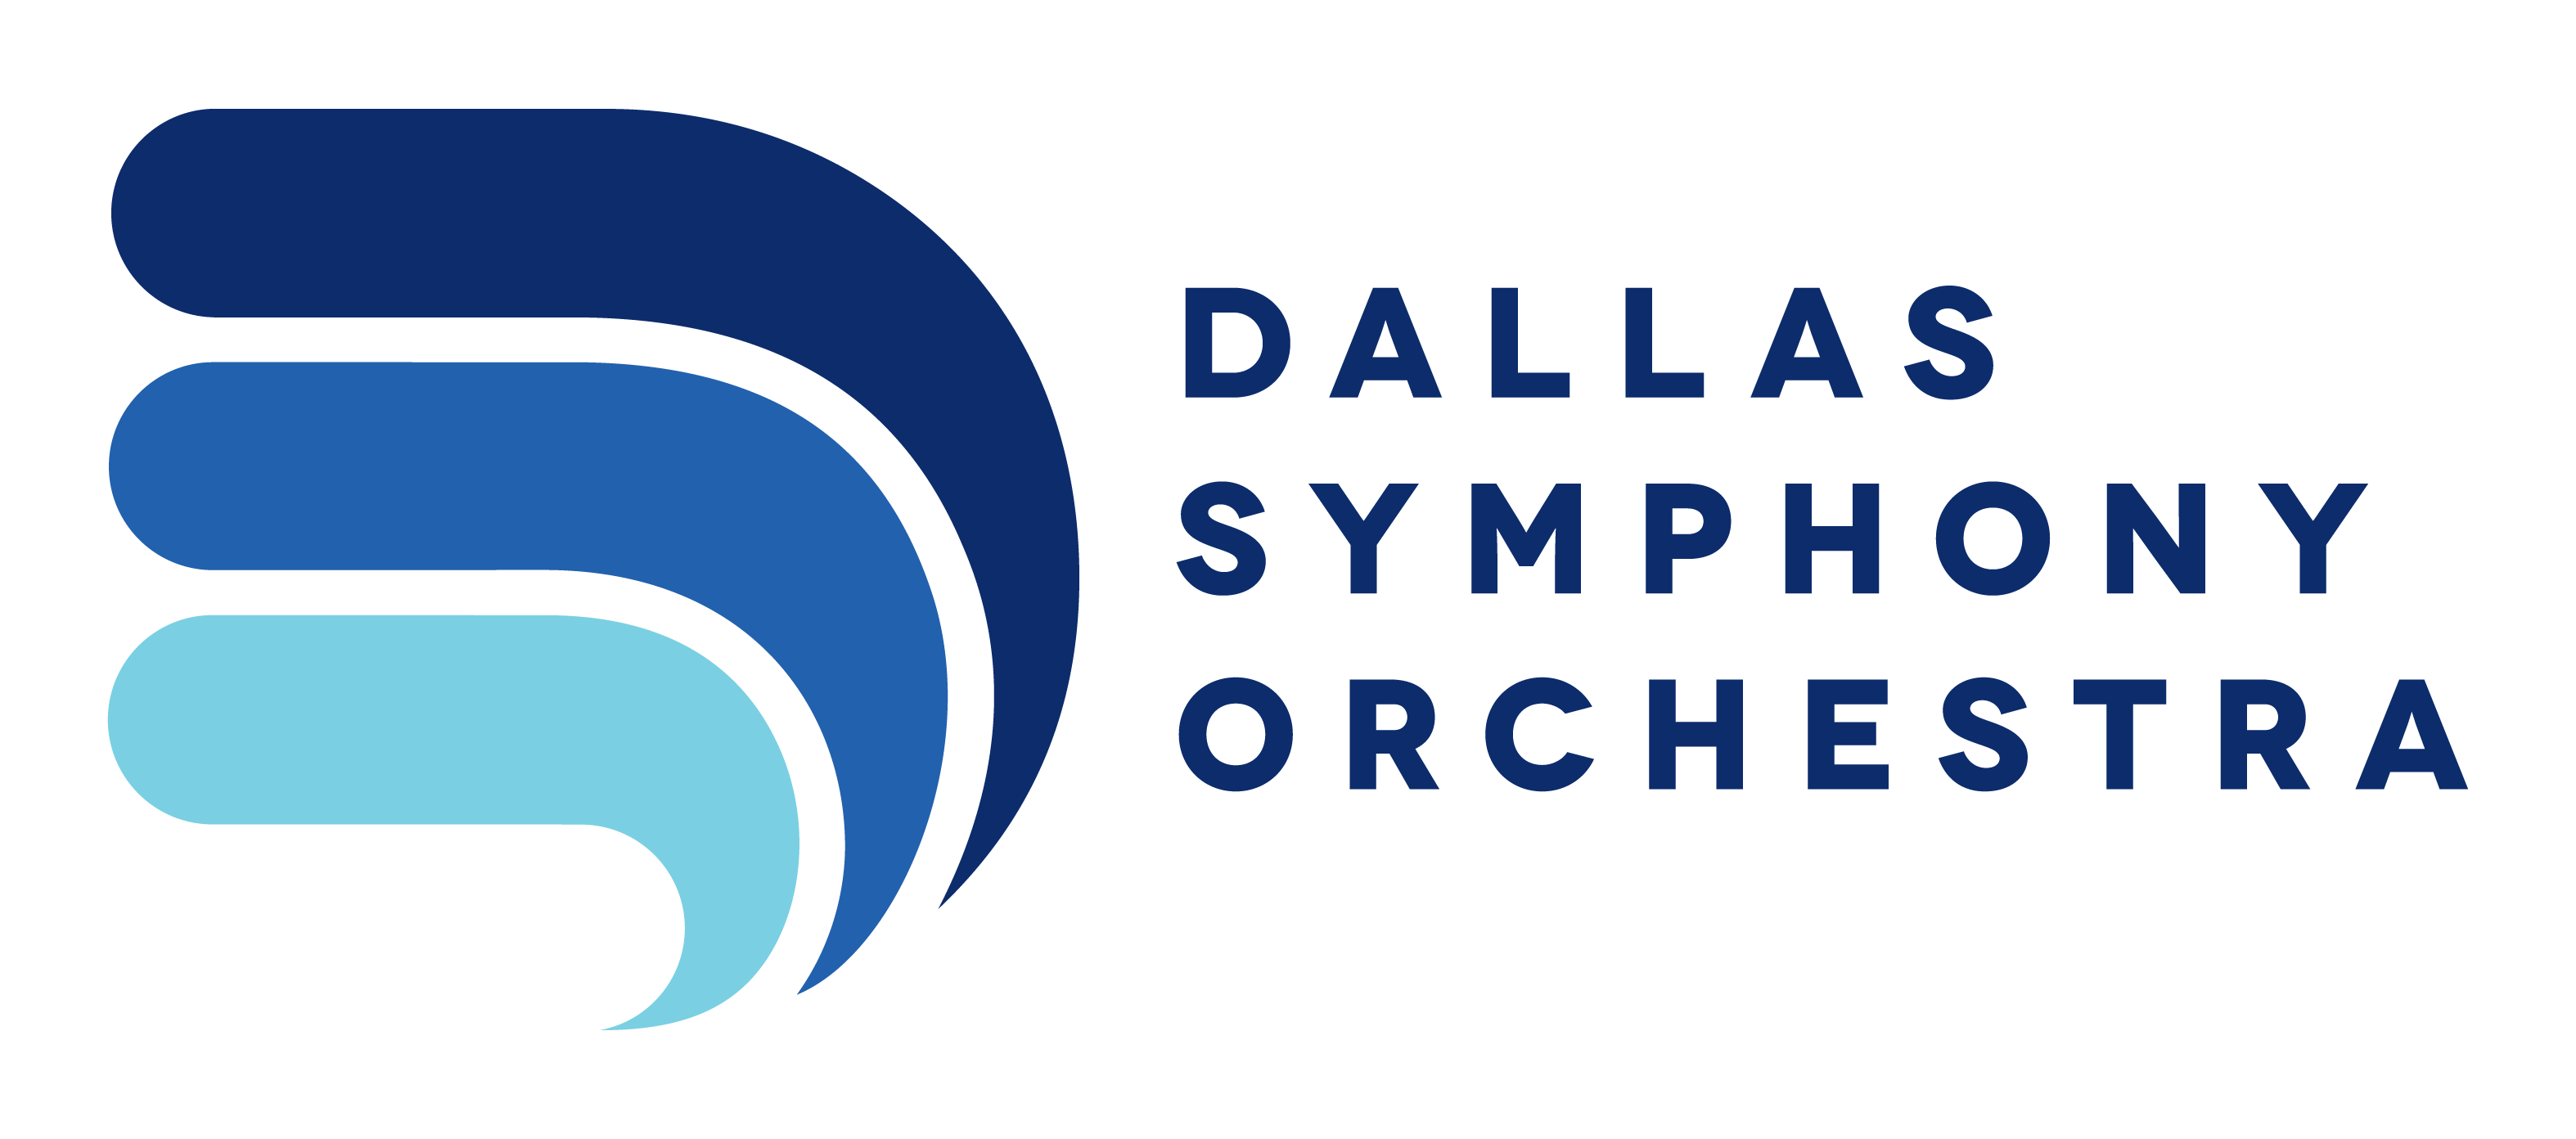 The Dallas Symphony